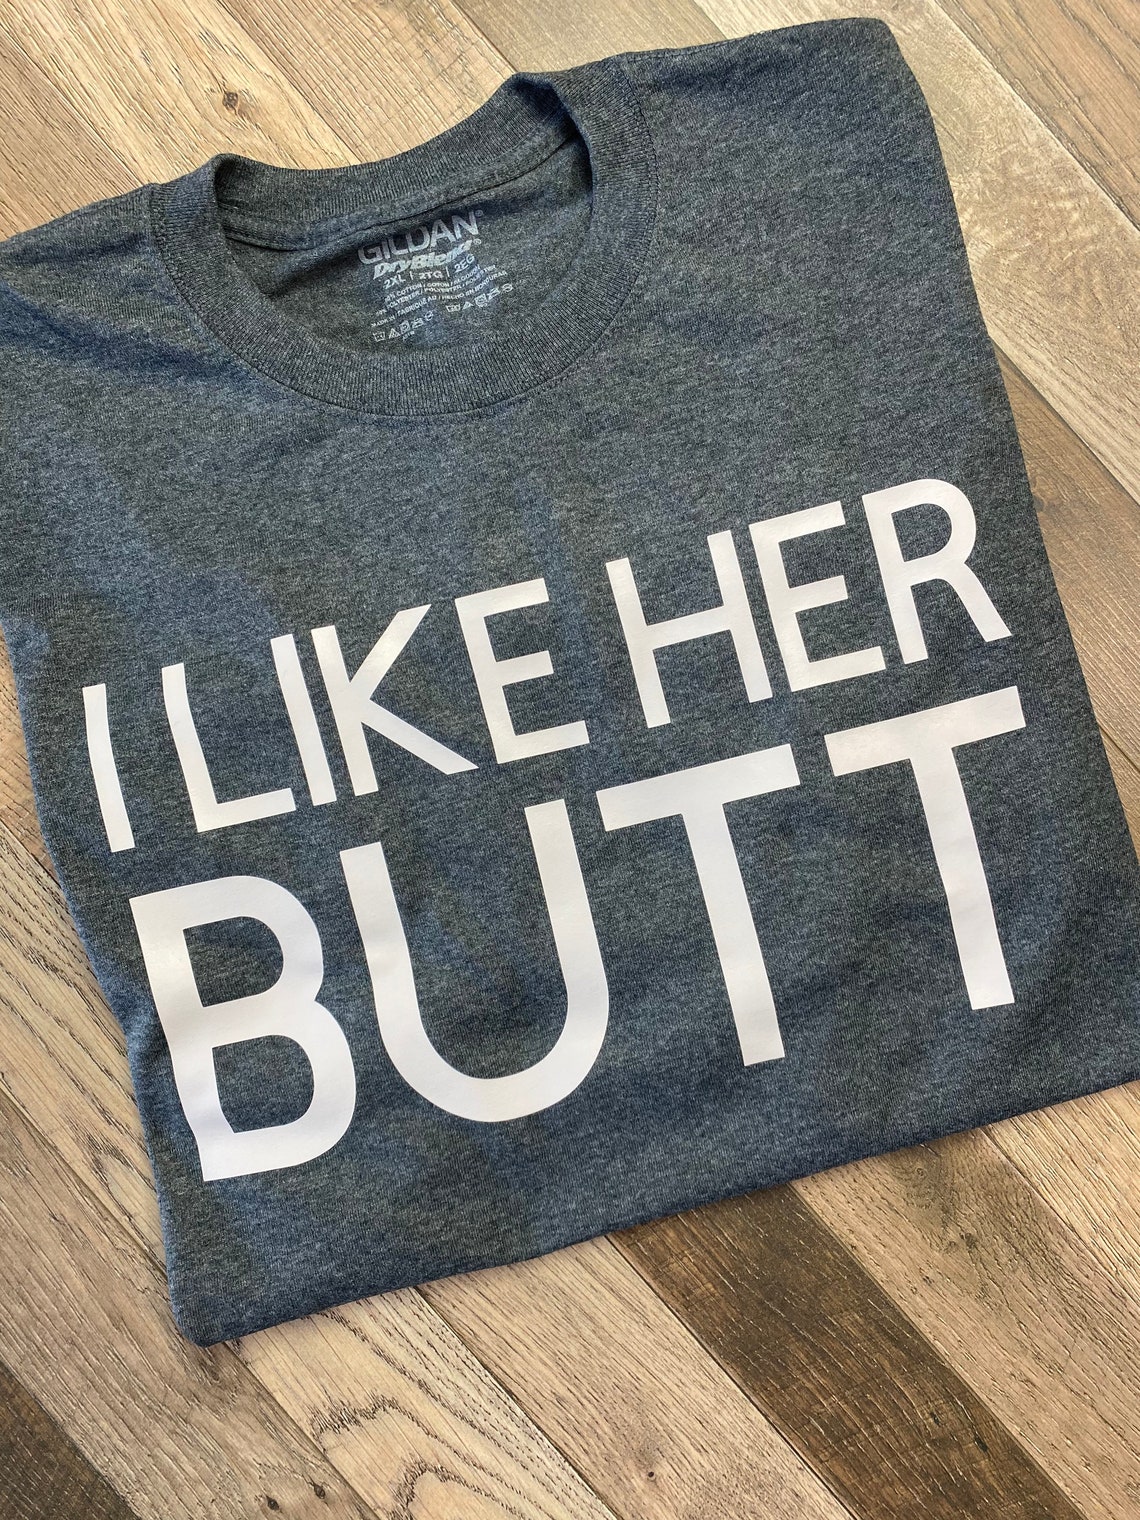 I Like Her Butt Shirt Couples Shirt Husband Shirt Hubby Shirt | Etsy